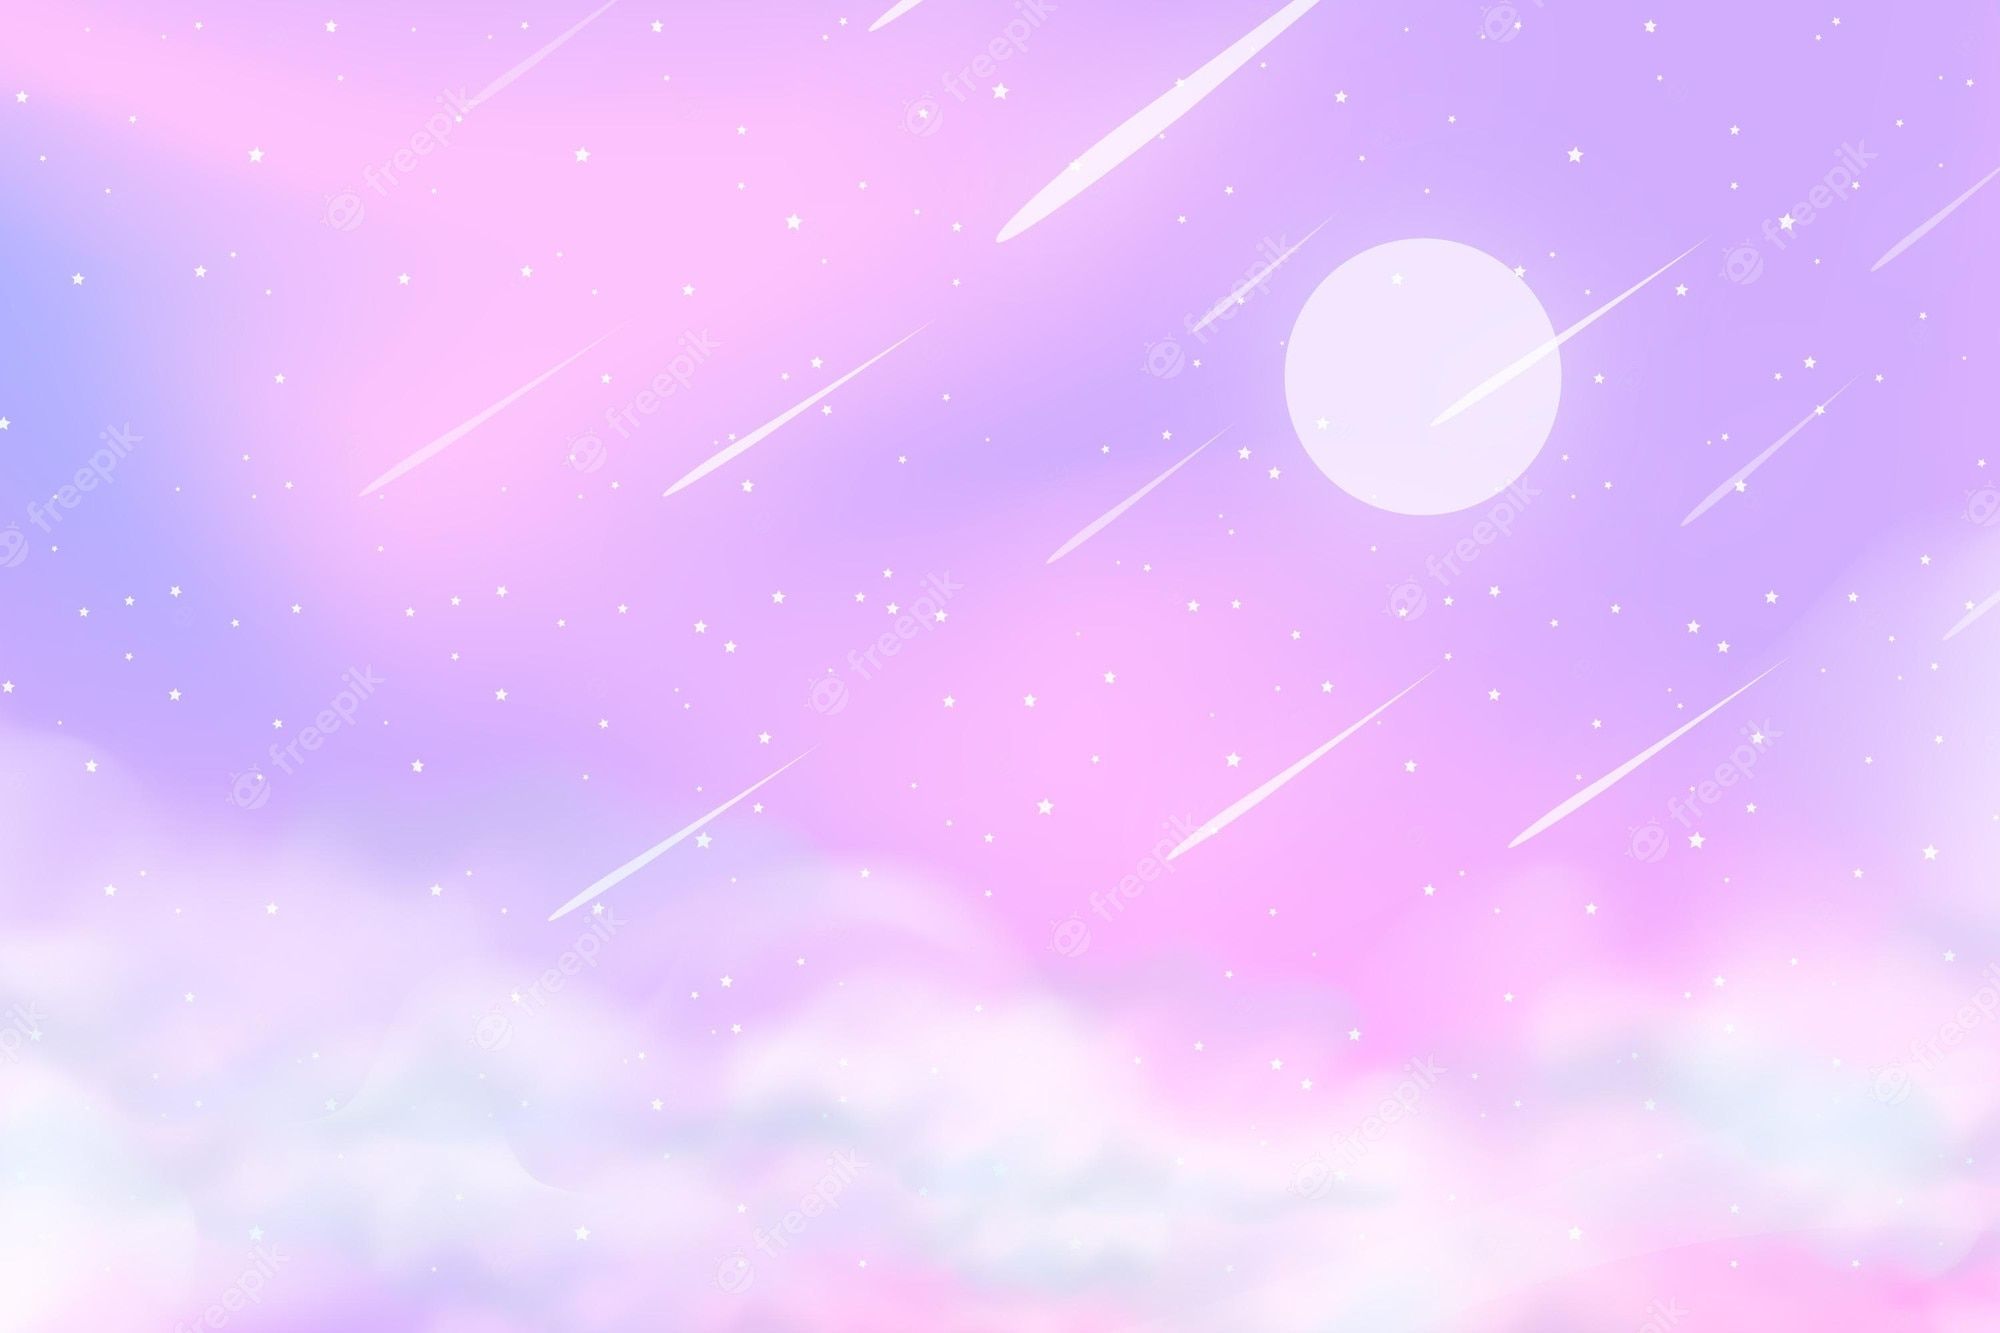 A pink and purple gradient sky with shooting stars - Kawaii